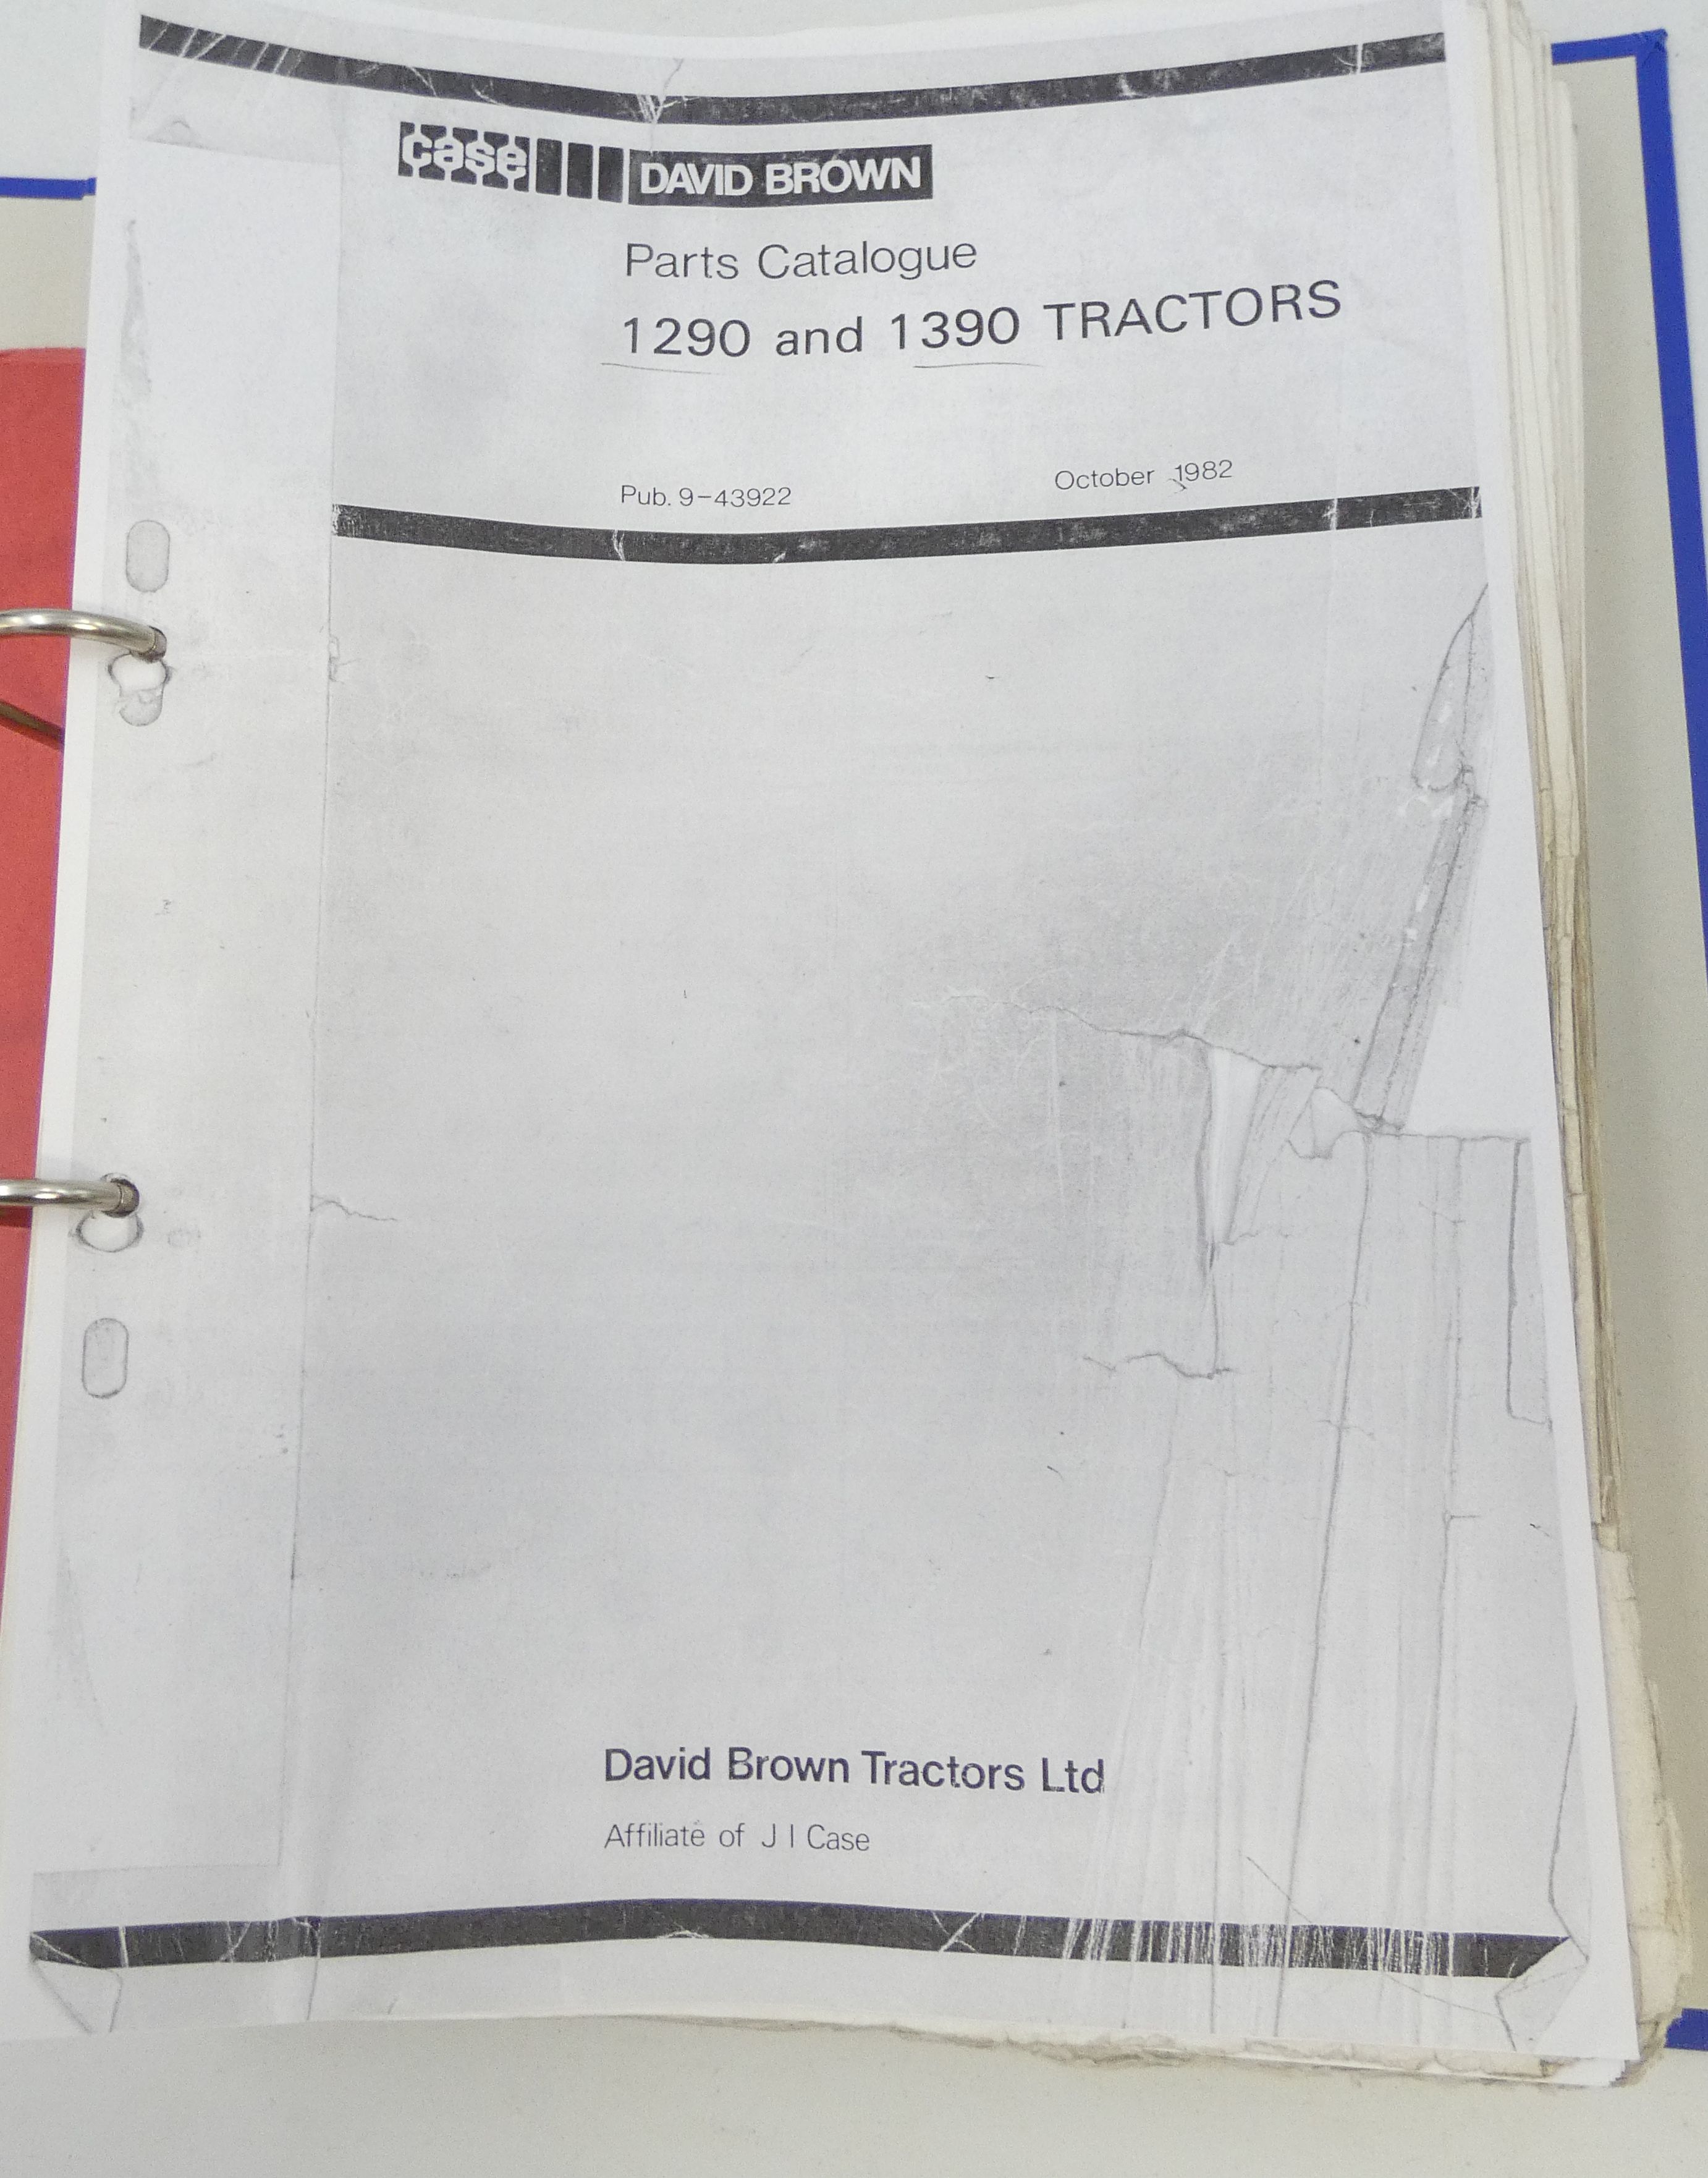 Case David Brown 1290 and 1390 tractors parts catalogue